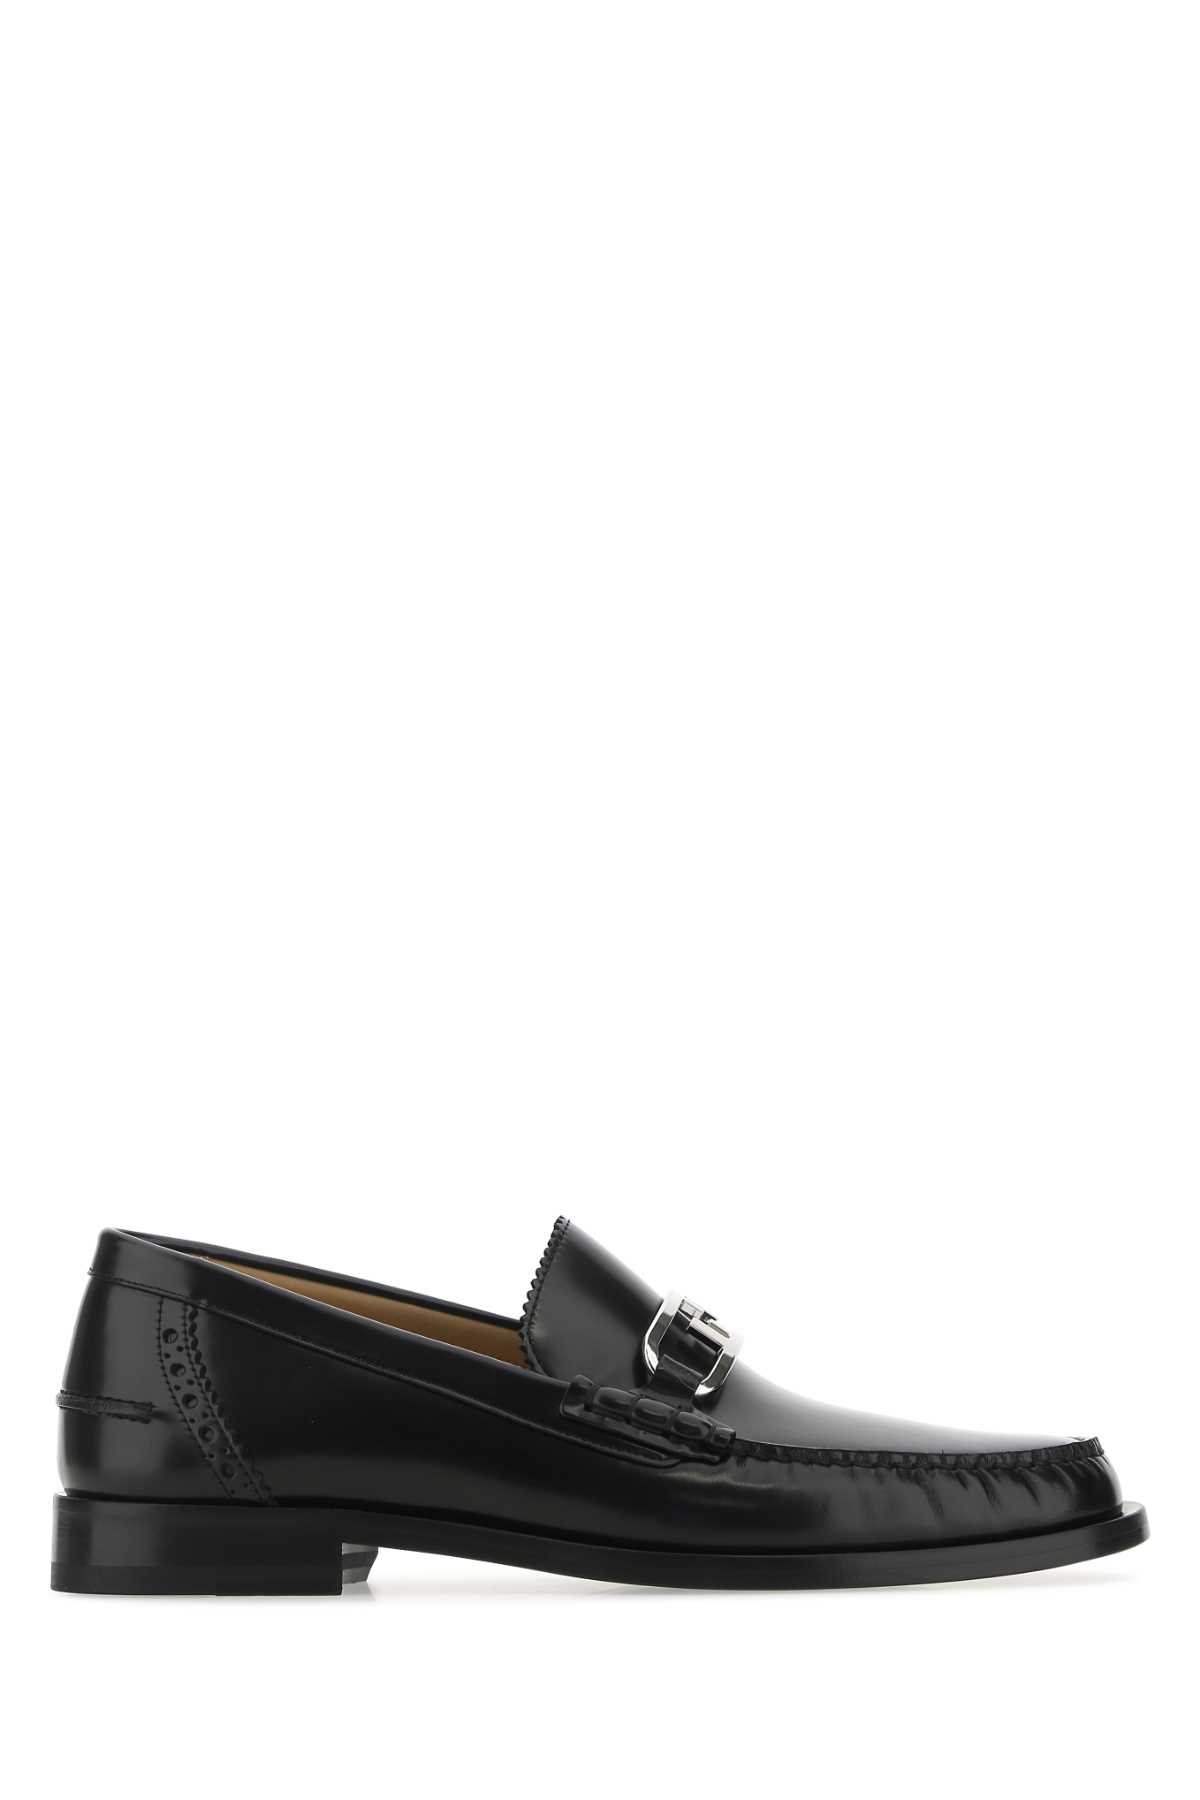 Fendi Black Leather Loafers